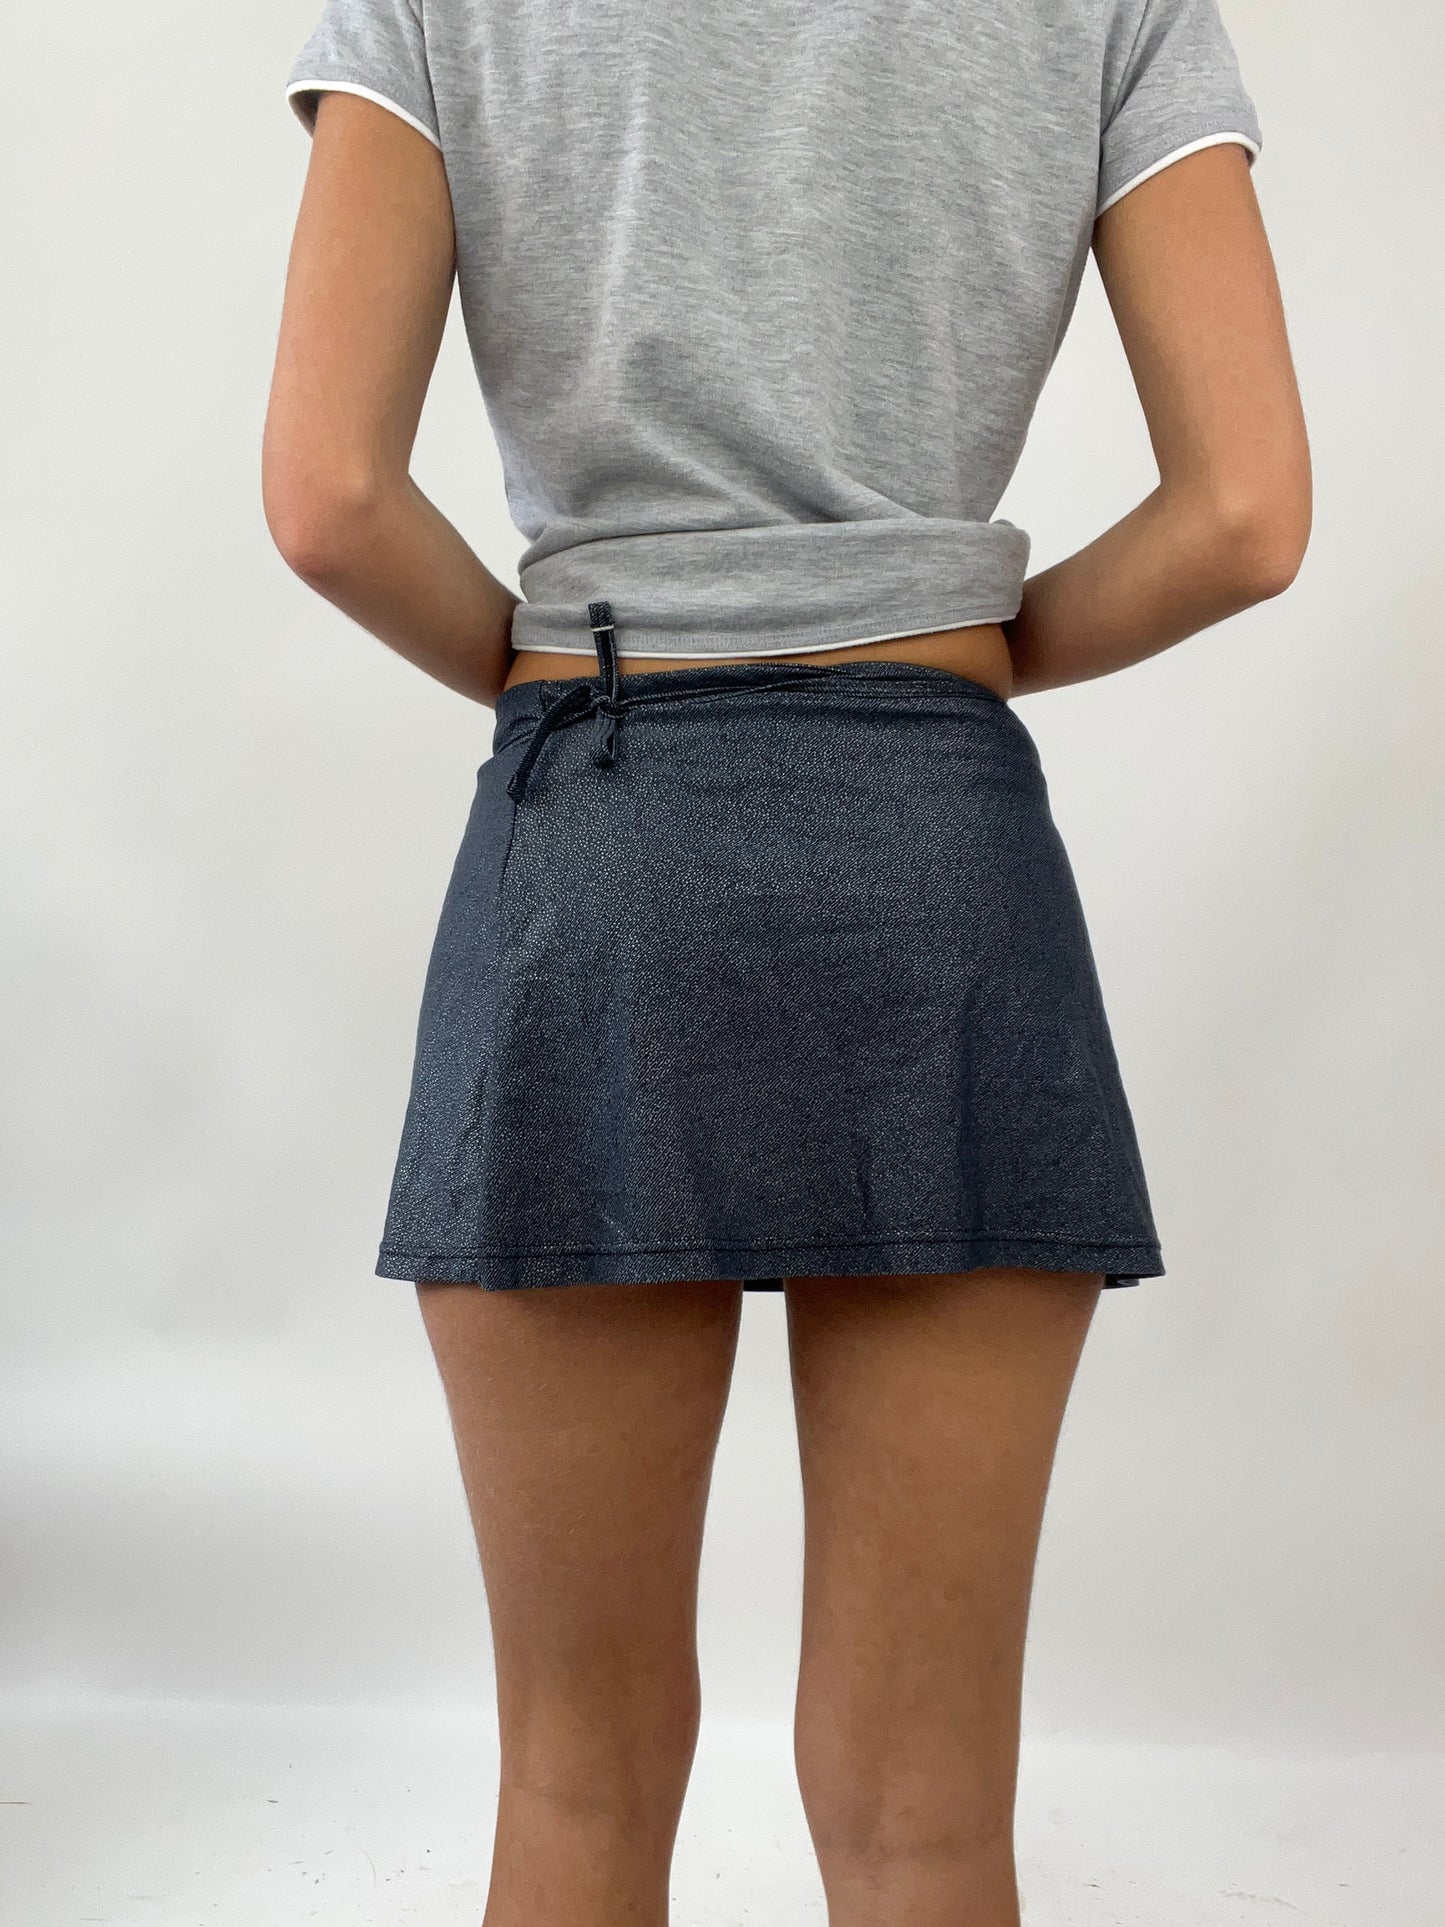 EUROS DROP | medium grey wrap skirt with glitter